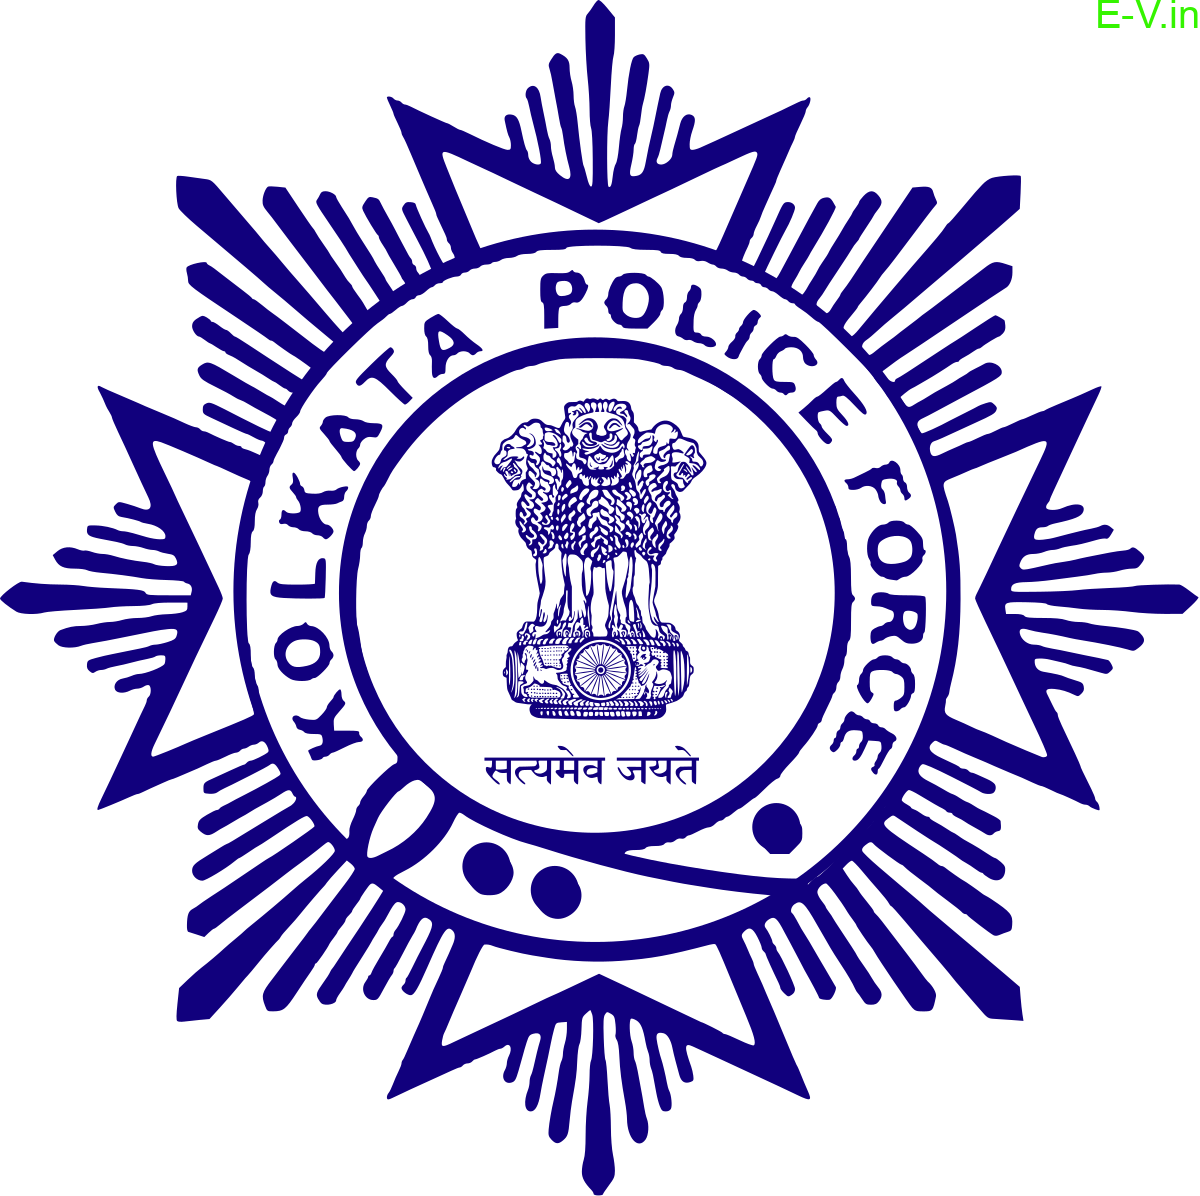 Kolkata Police 226 electric vehicles